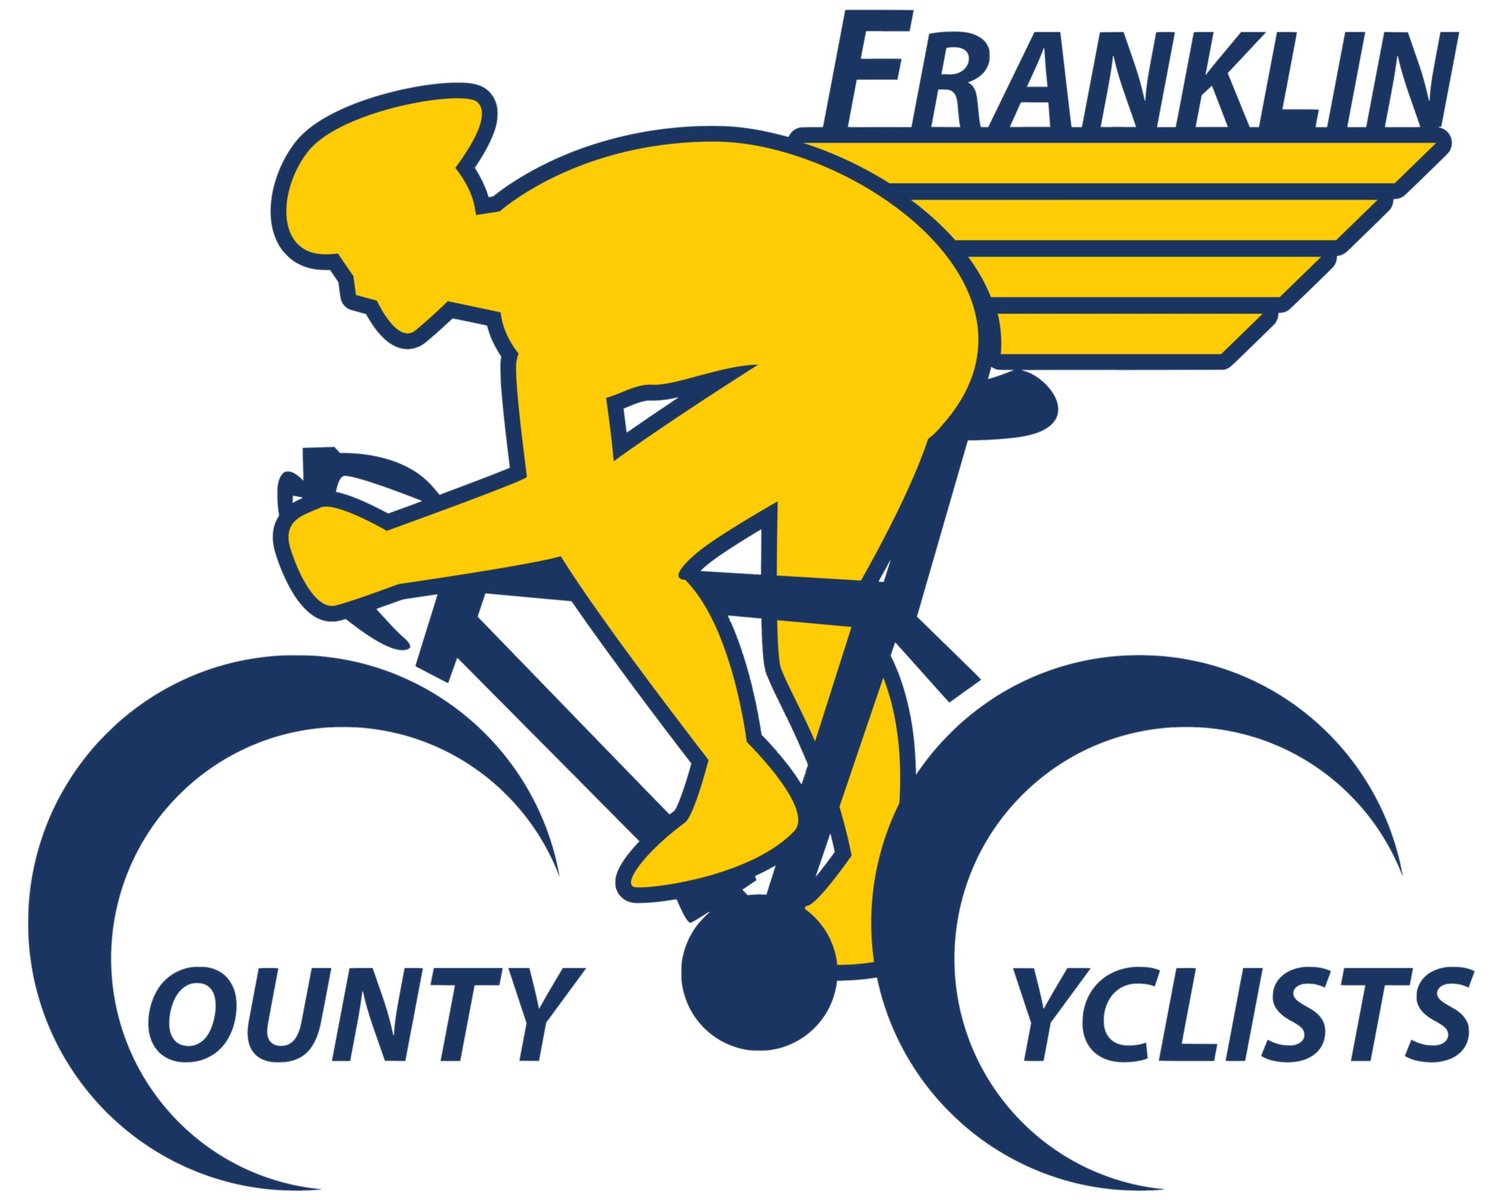 Franklin County Cyclists